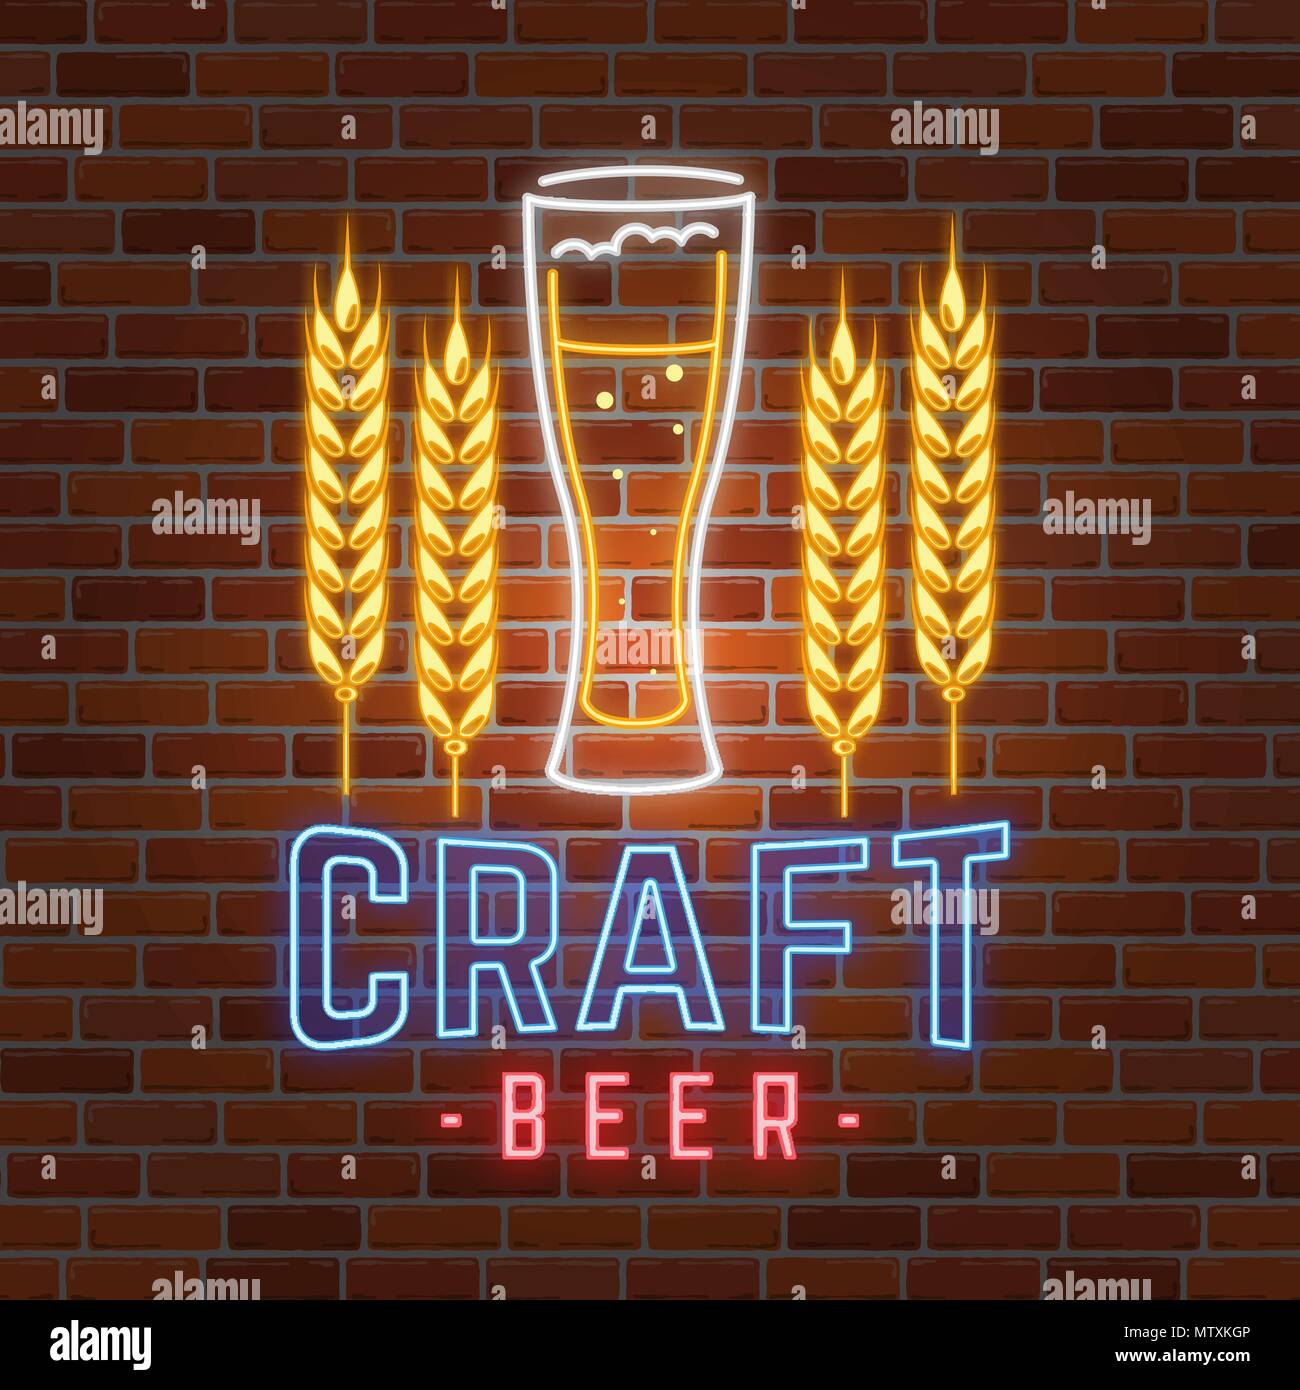 Retro neon Beer Bar sign on brick wall background. Vector illustration. Neon design for bar, pub or restaurant business. Craft beer. Stock Vector